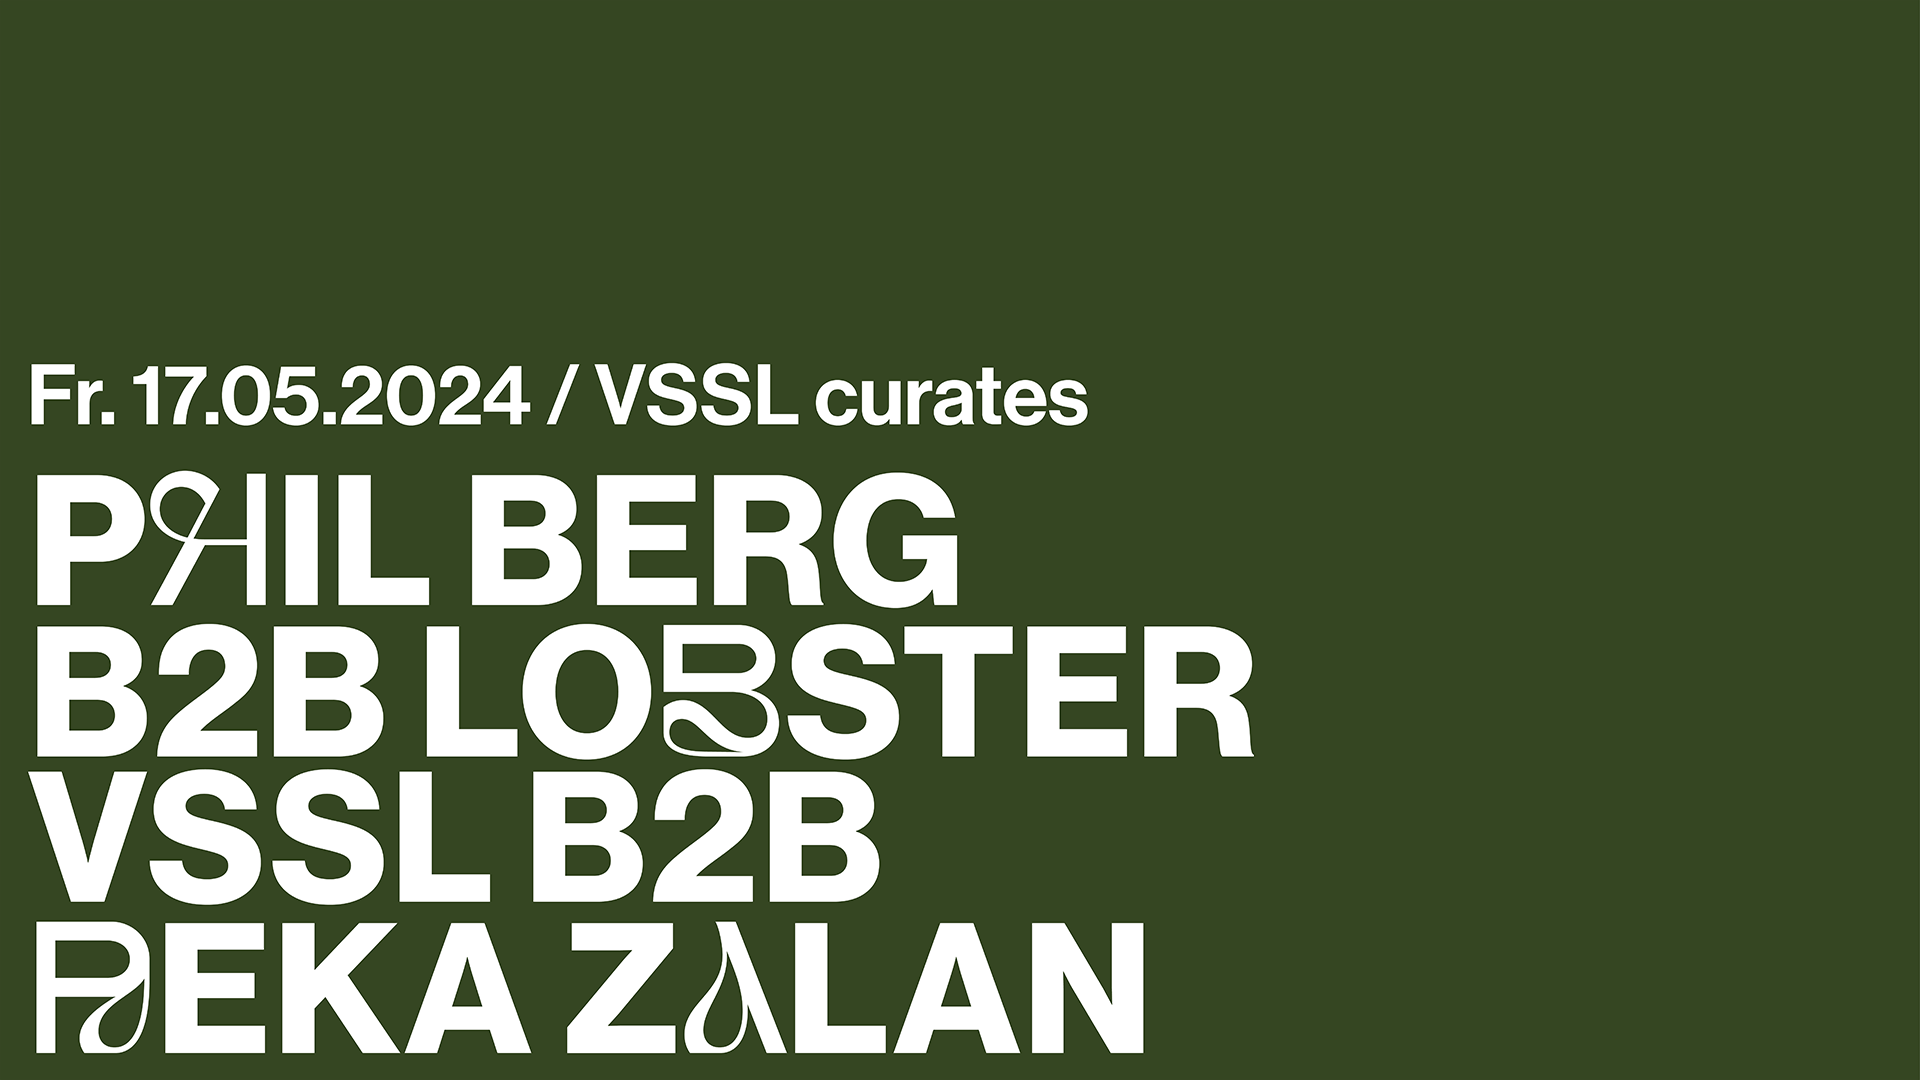 VSSL invites Reka Zalan B2B VSSL, Phil Berg B2B Lobster - フライヤー表